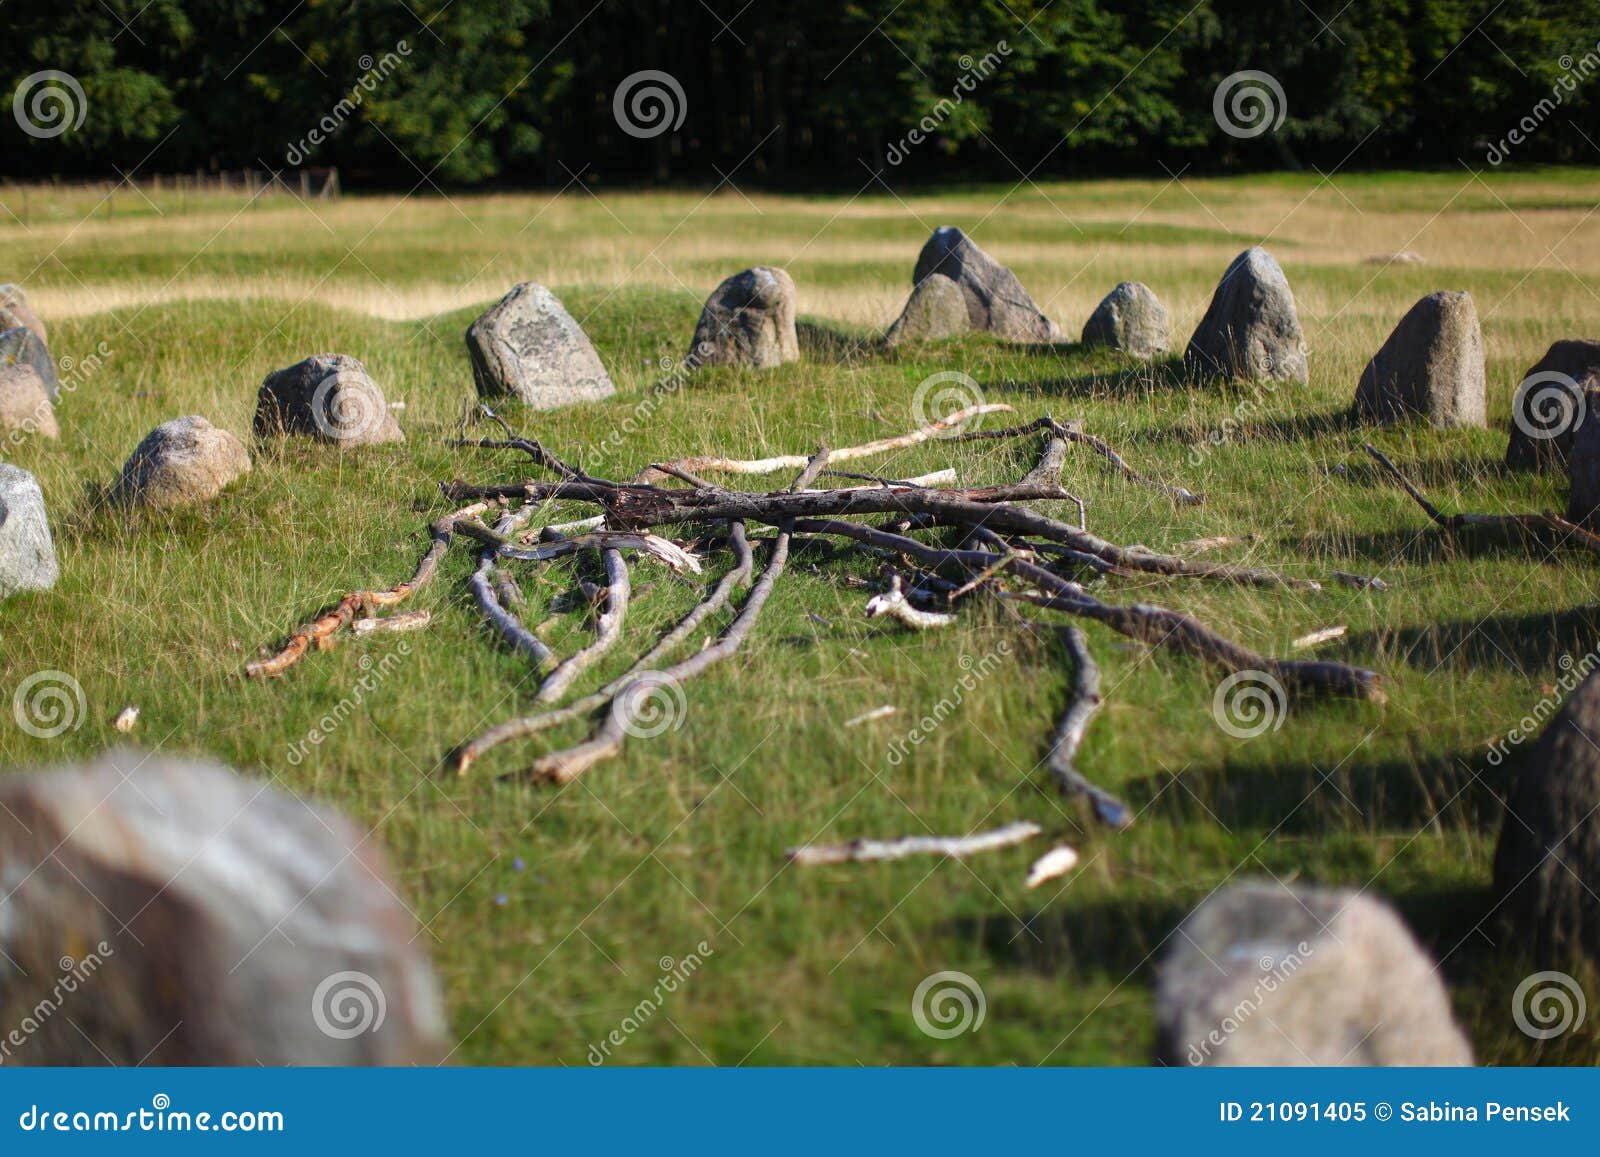 viking burial ground in denmark